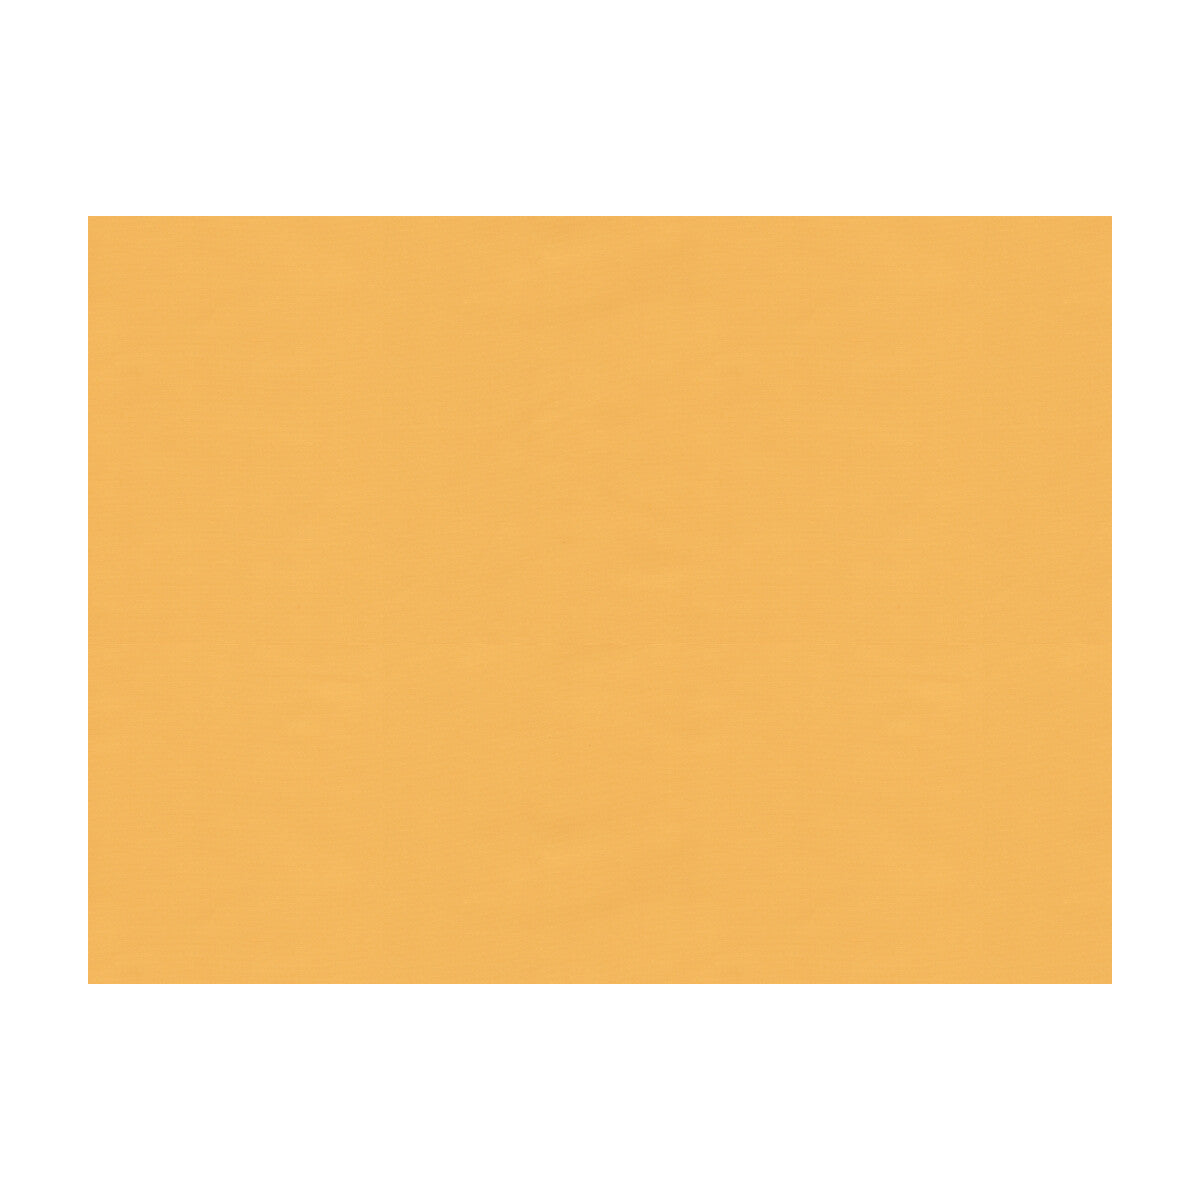 Ninon Taffetas fabric in jaune color - pattern BR-81081.M.0 - by Brunschwig &amp; Fils